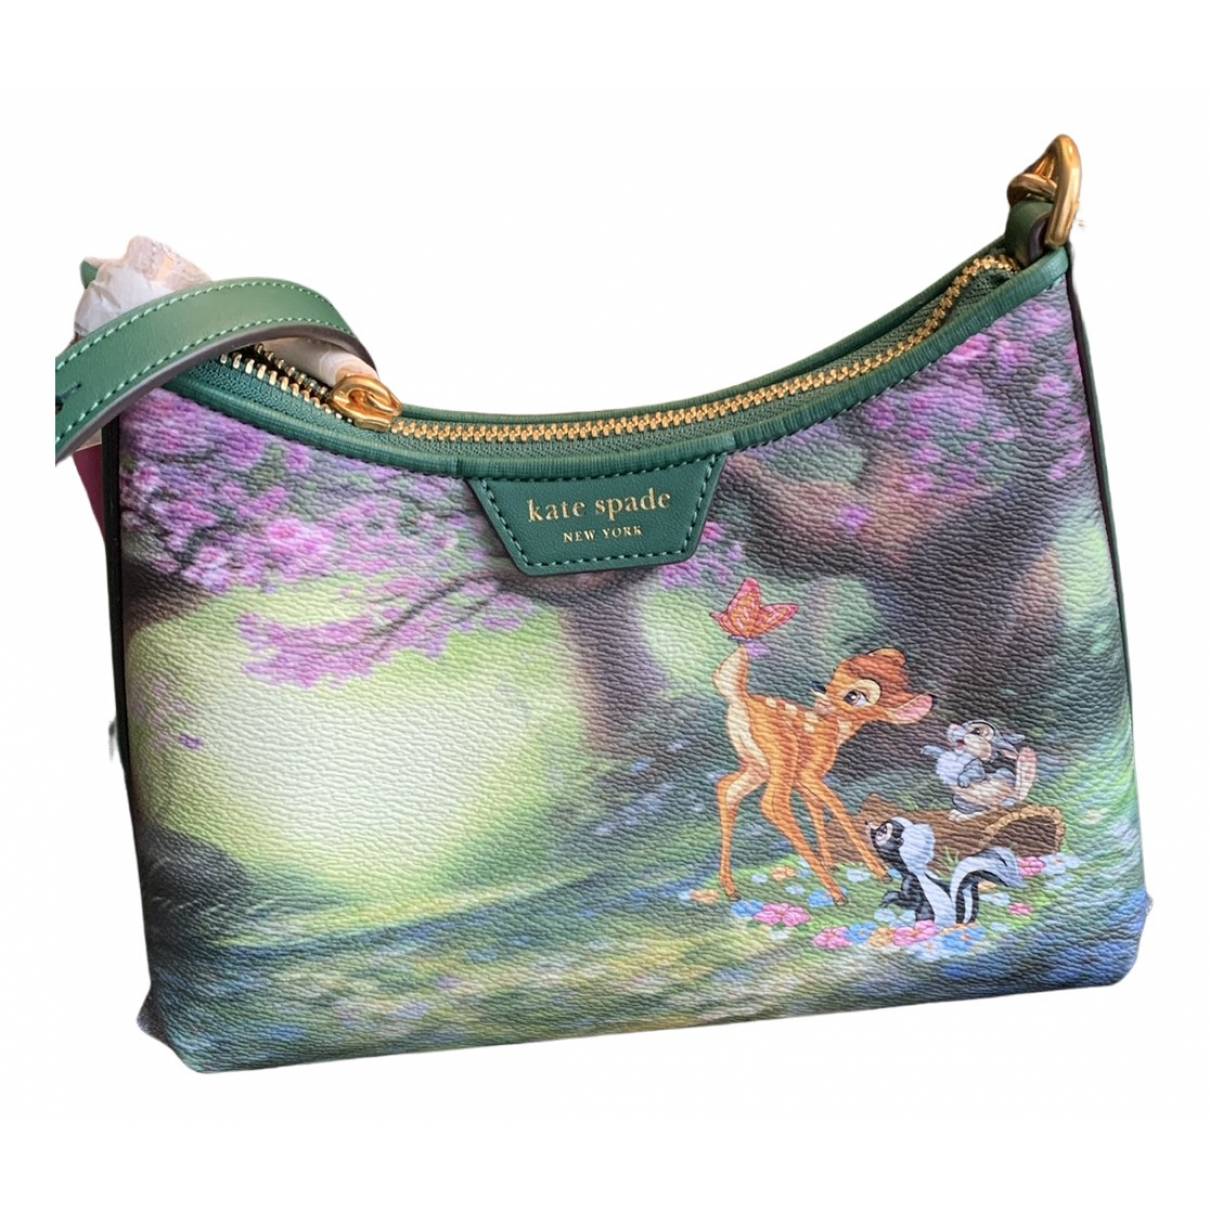 Bambi Crossbody Bag - Cream | Unitude Leather Bags for Women